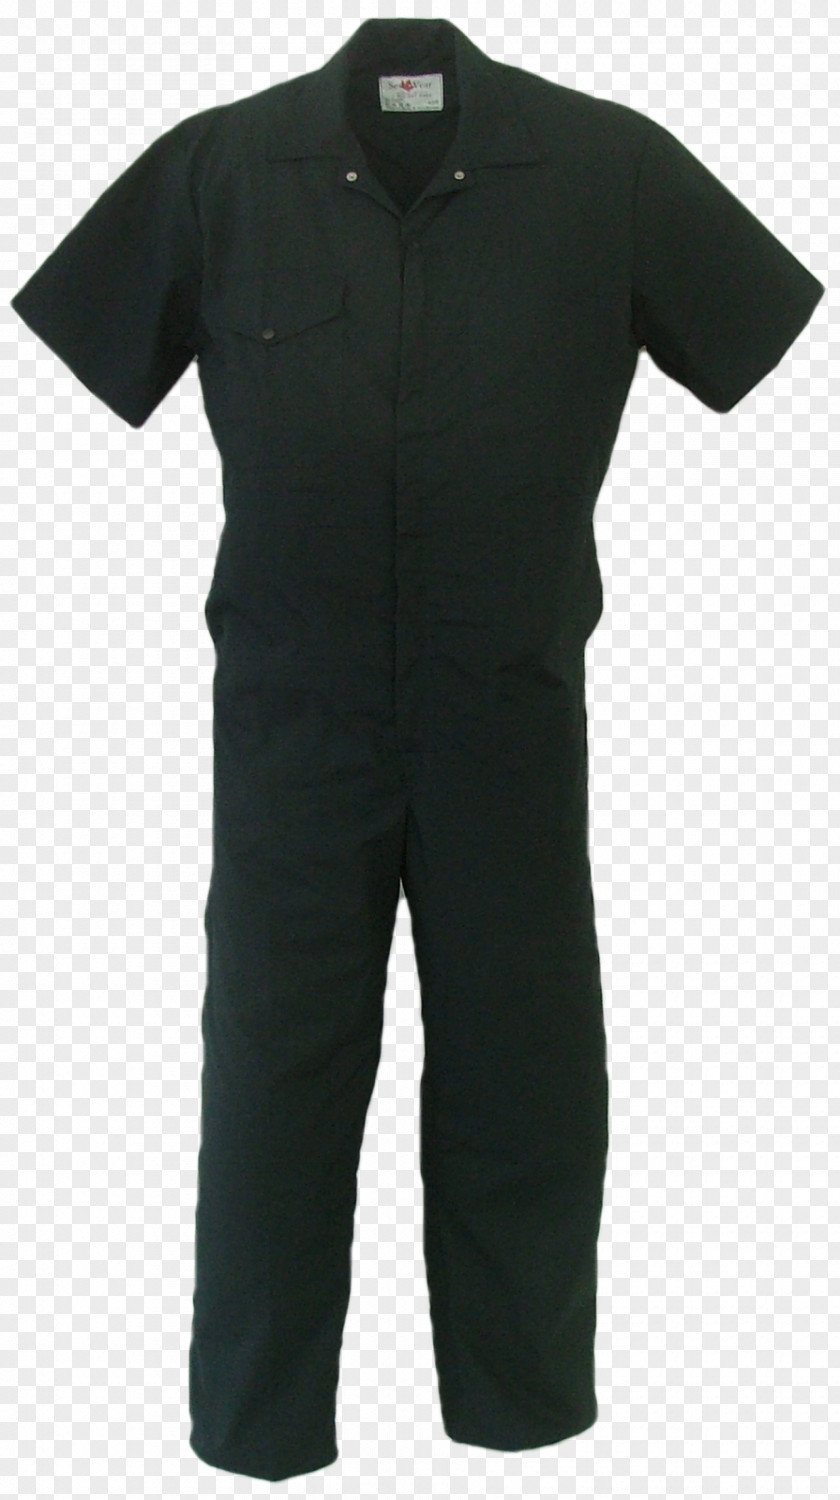 Garment Sleeve T-shirt Zipper Pocket Clothing PNG